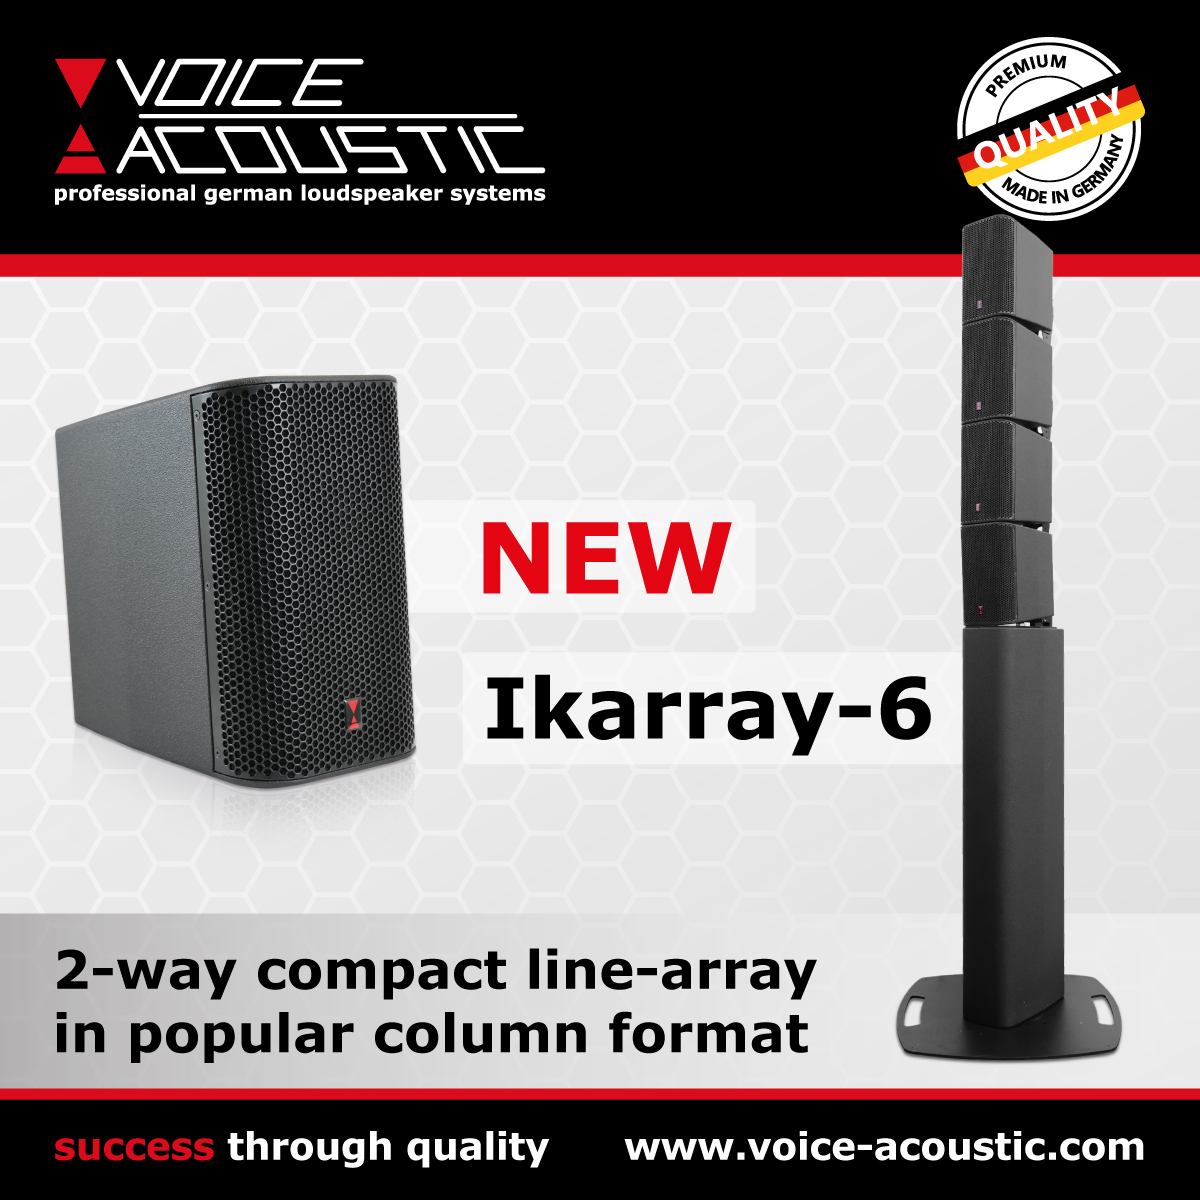 New: Voice-Acoustic Ikarray-6